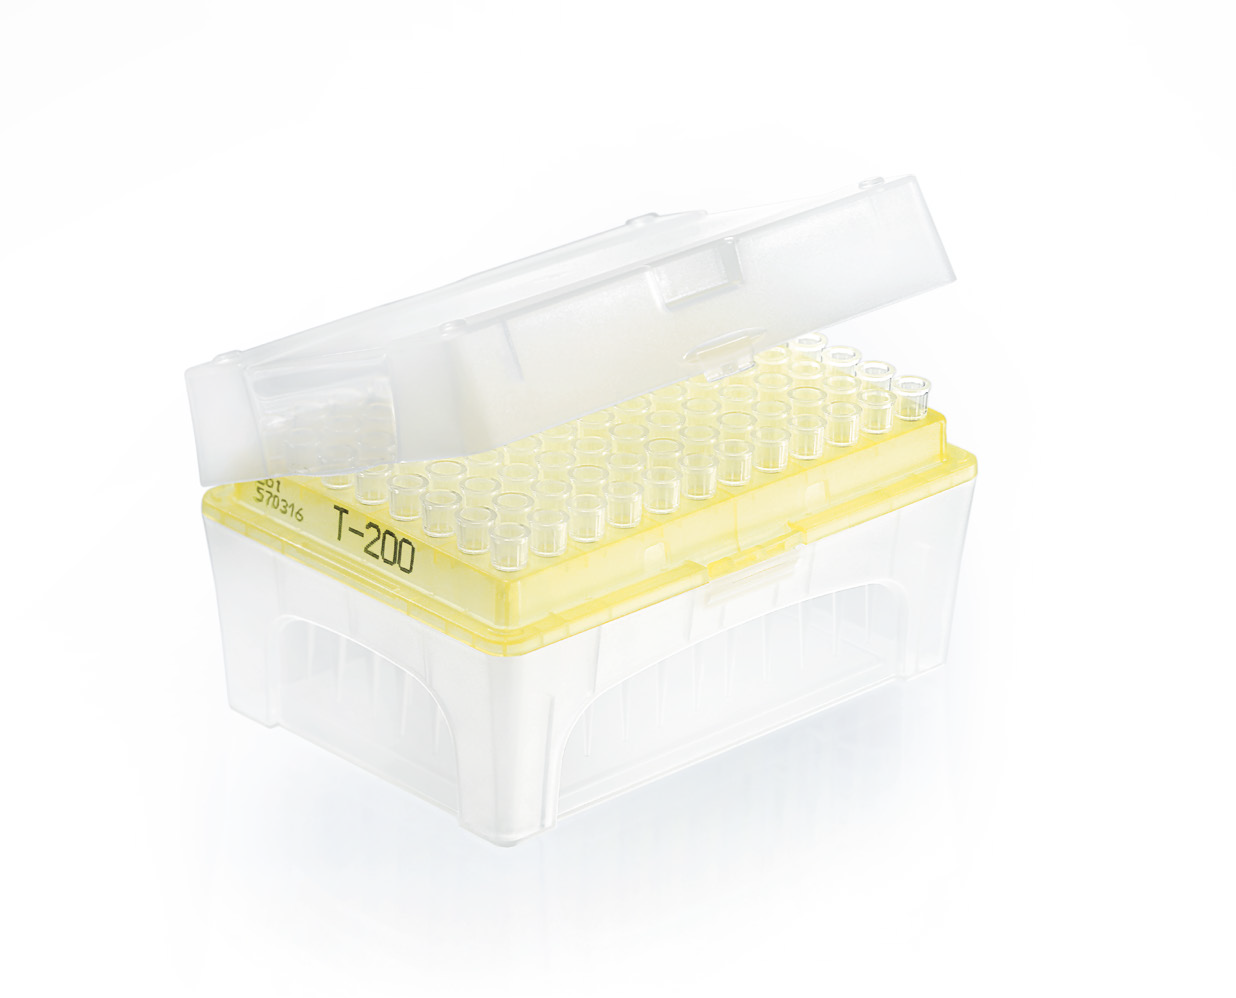 Filter tips ULR rack DNA-/RNase-free IVD TipBox 5 - 200 μl, non-sterile, PCK=480